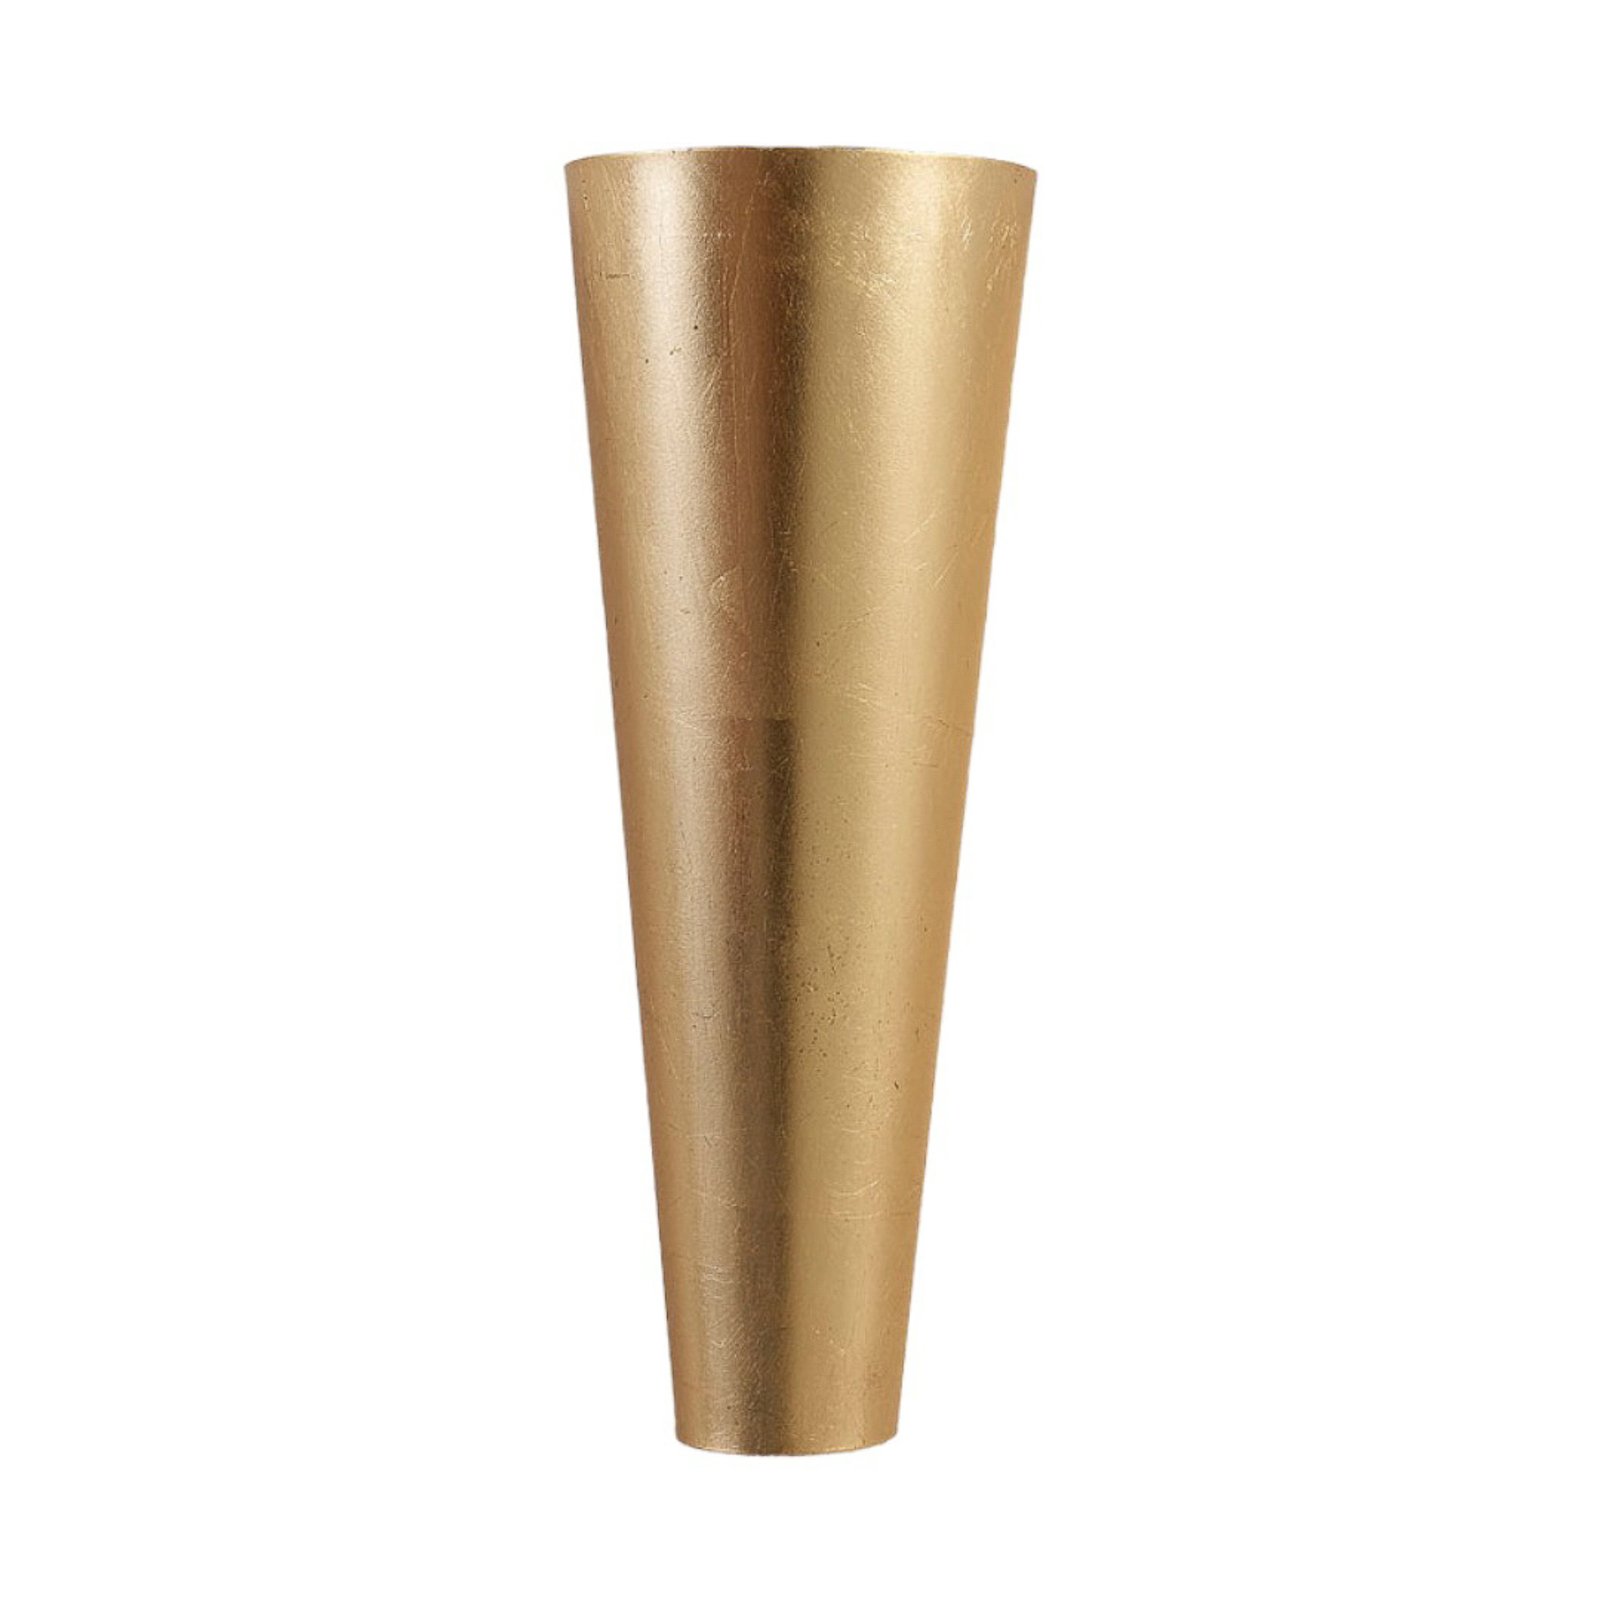 Perfect gevormde wandlamp Conan in goud